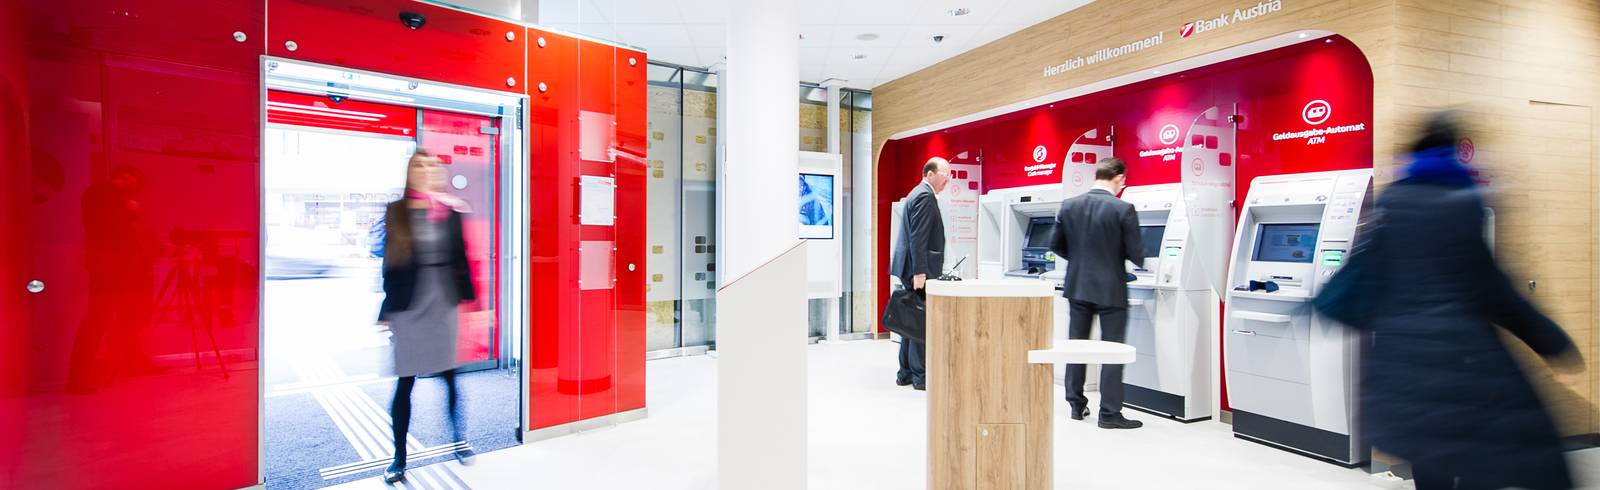 Bank Austria fährt Betreuung herunter